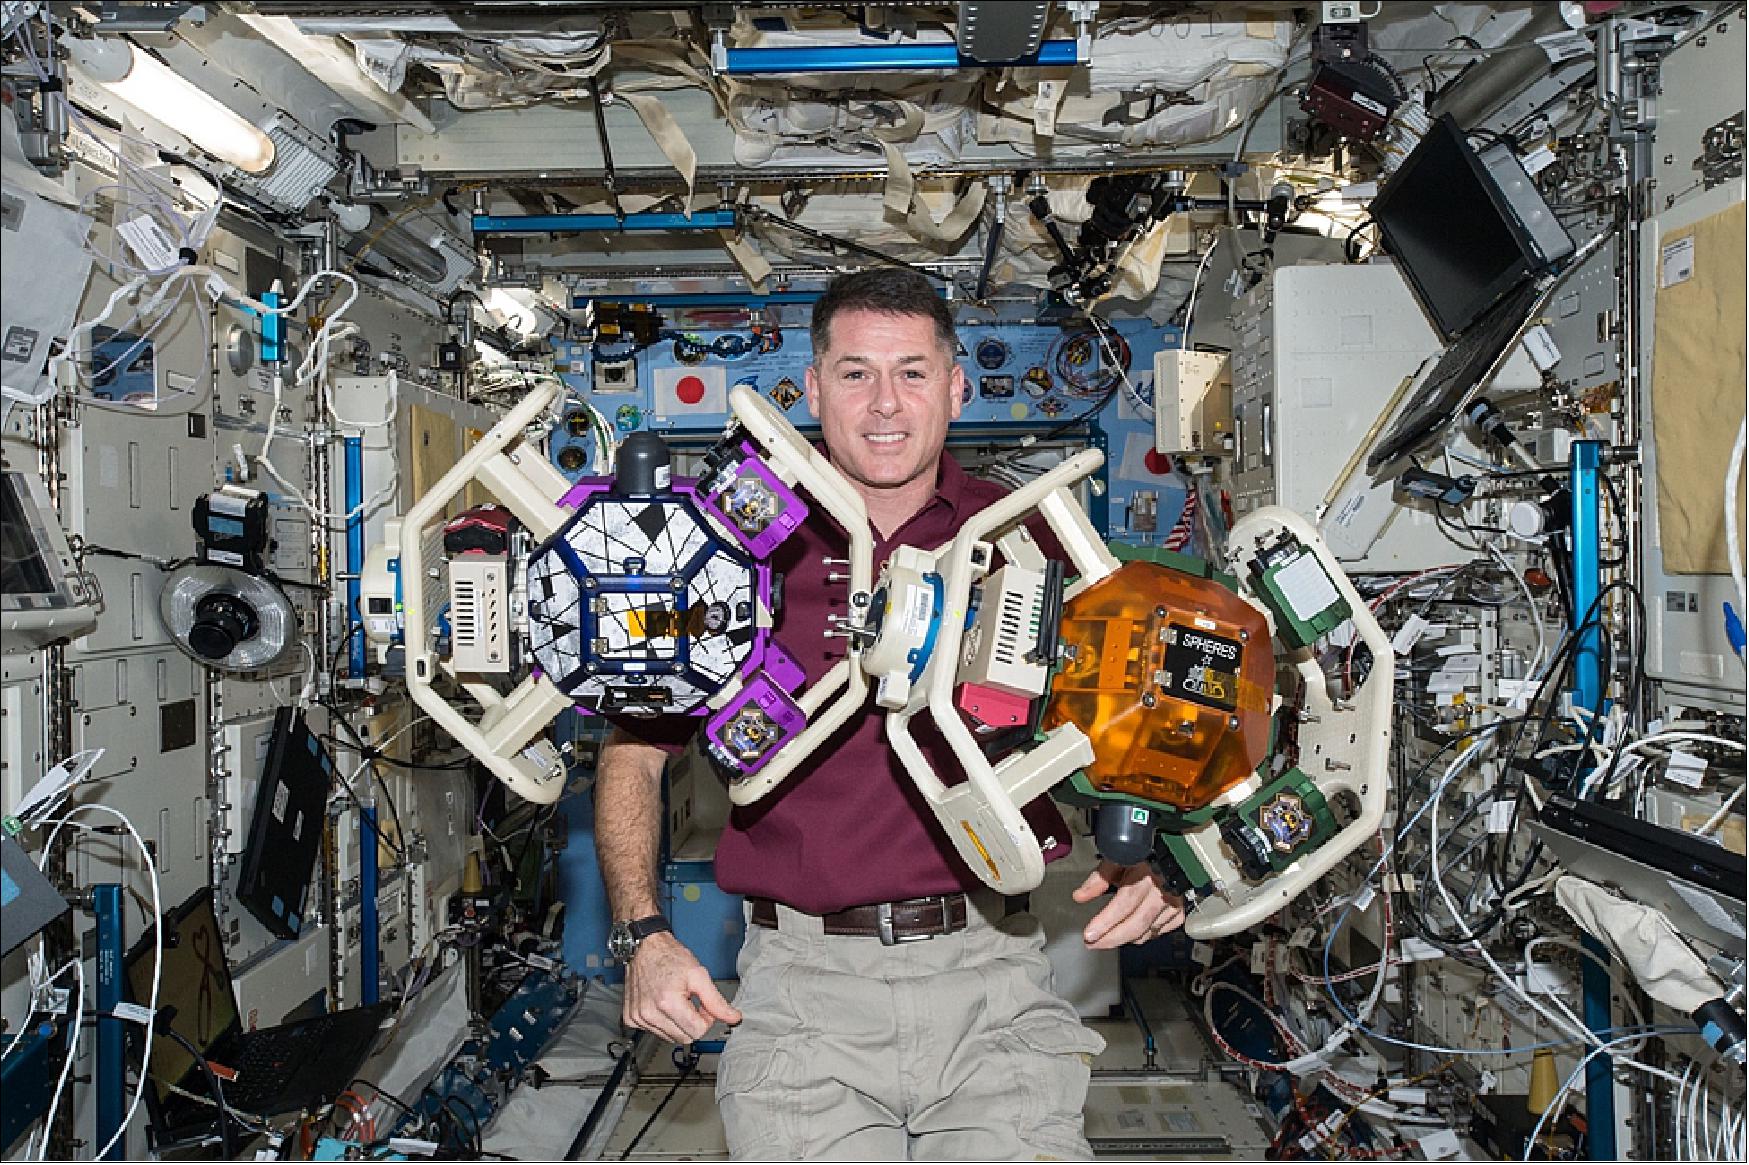 Figure 24: NASA astronaut Shane Kimbrough takes a photo with the two Halo units (image credit: NASA Ames)